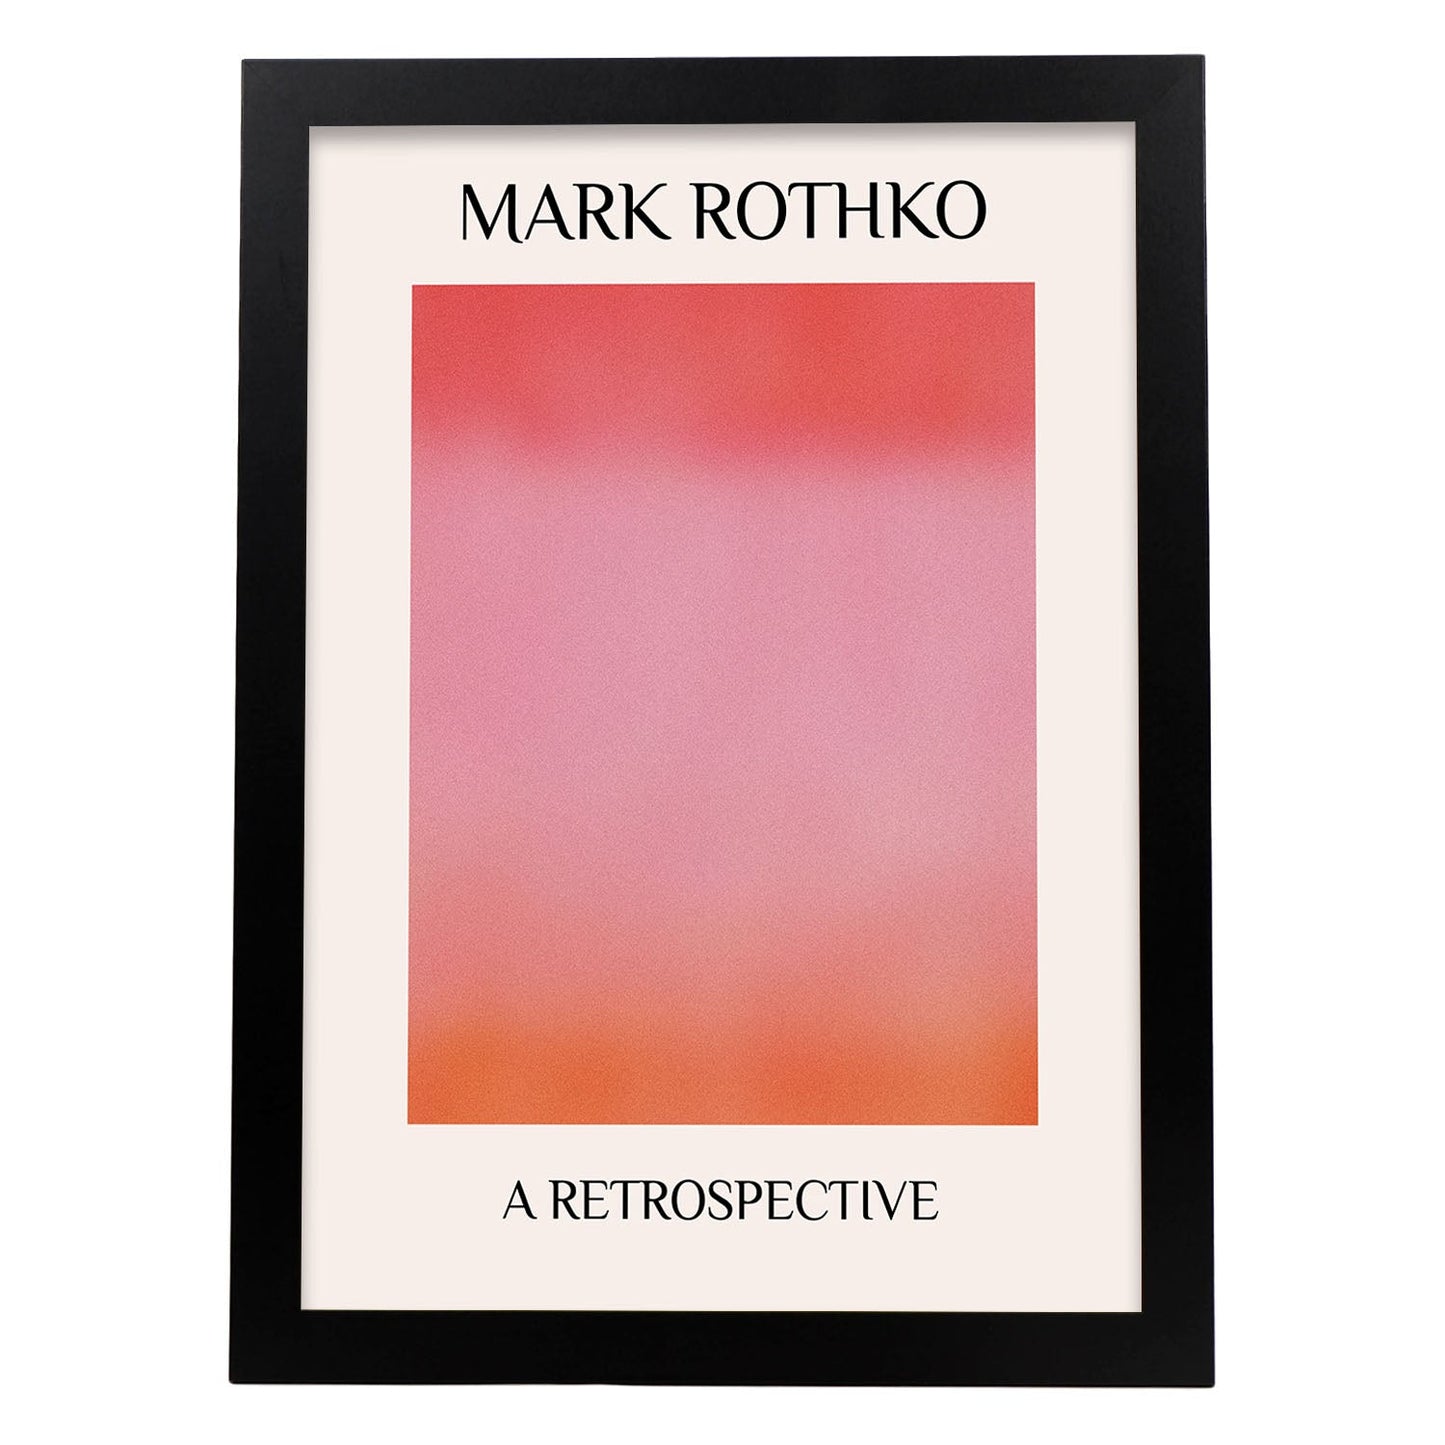 Lamina artistica decorativa con ilustración de Exposición Rothko 6 estilo expresionismo abstracto-Artwork-Nacnic-A4-Marco Negro-Nacnic Estudio SL